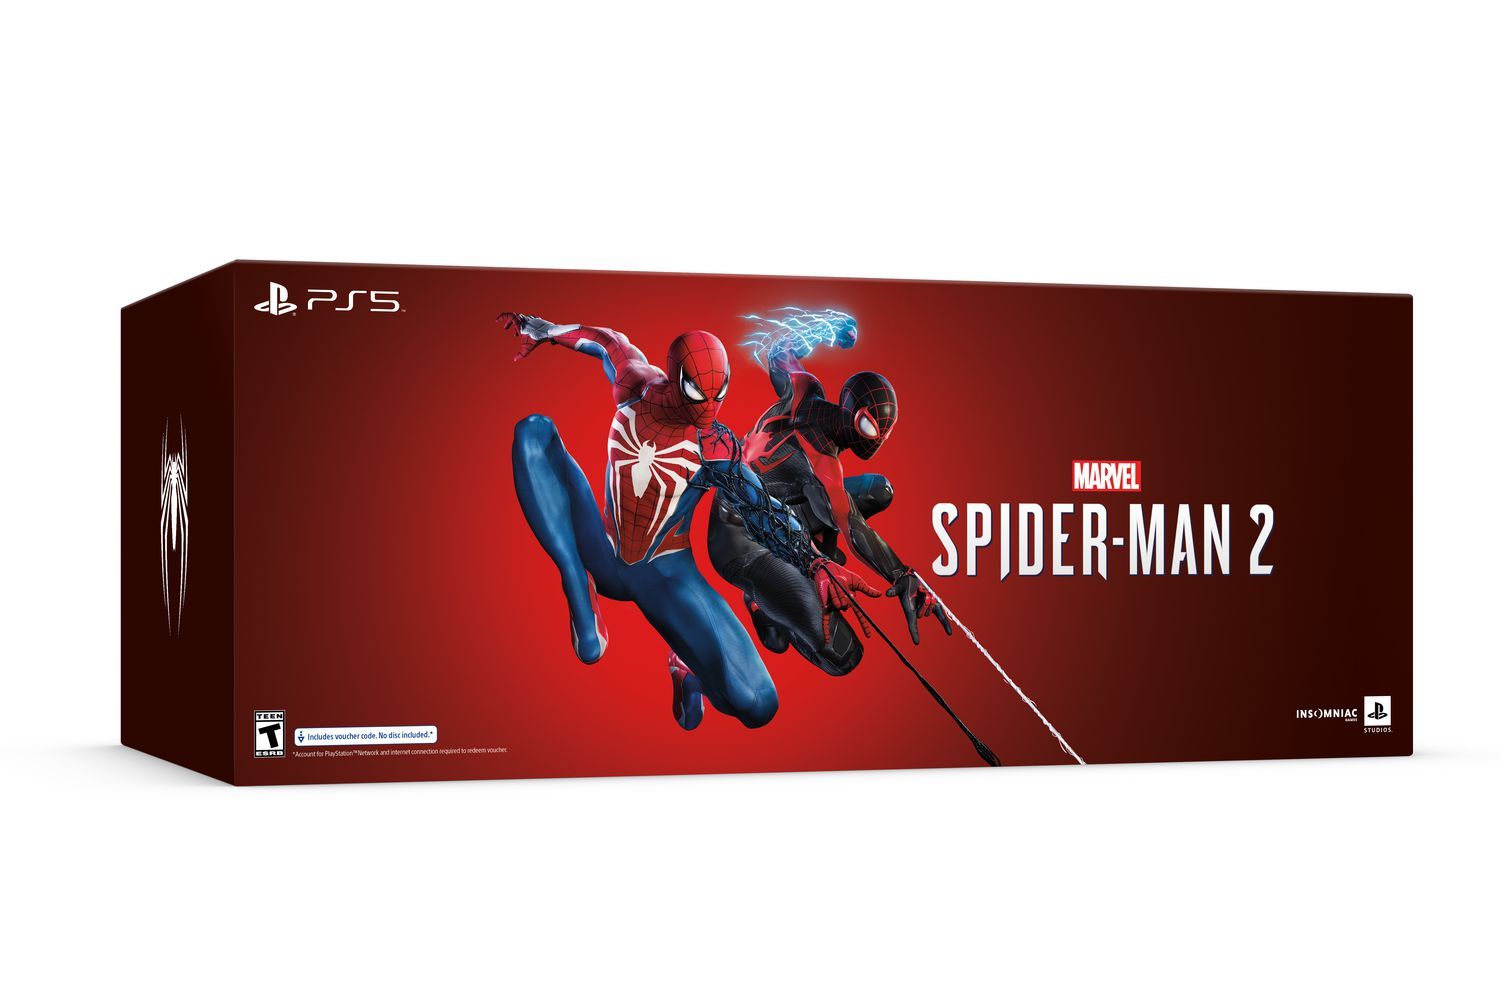 PS5 Collectors Edition Spiderman Box